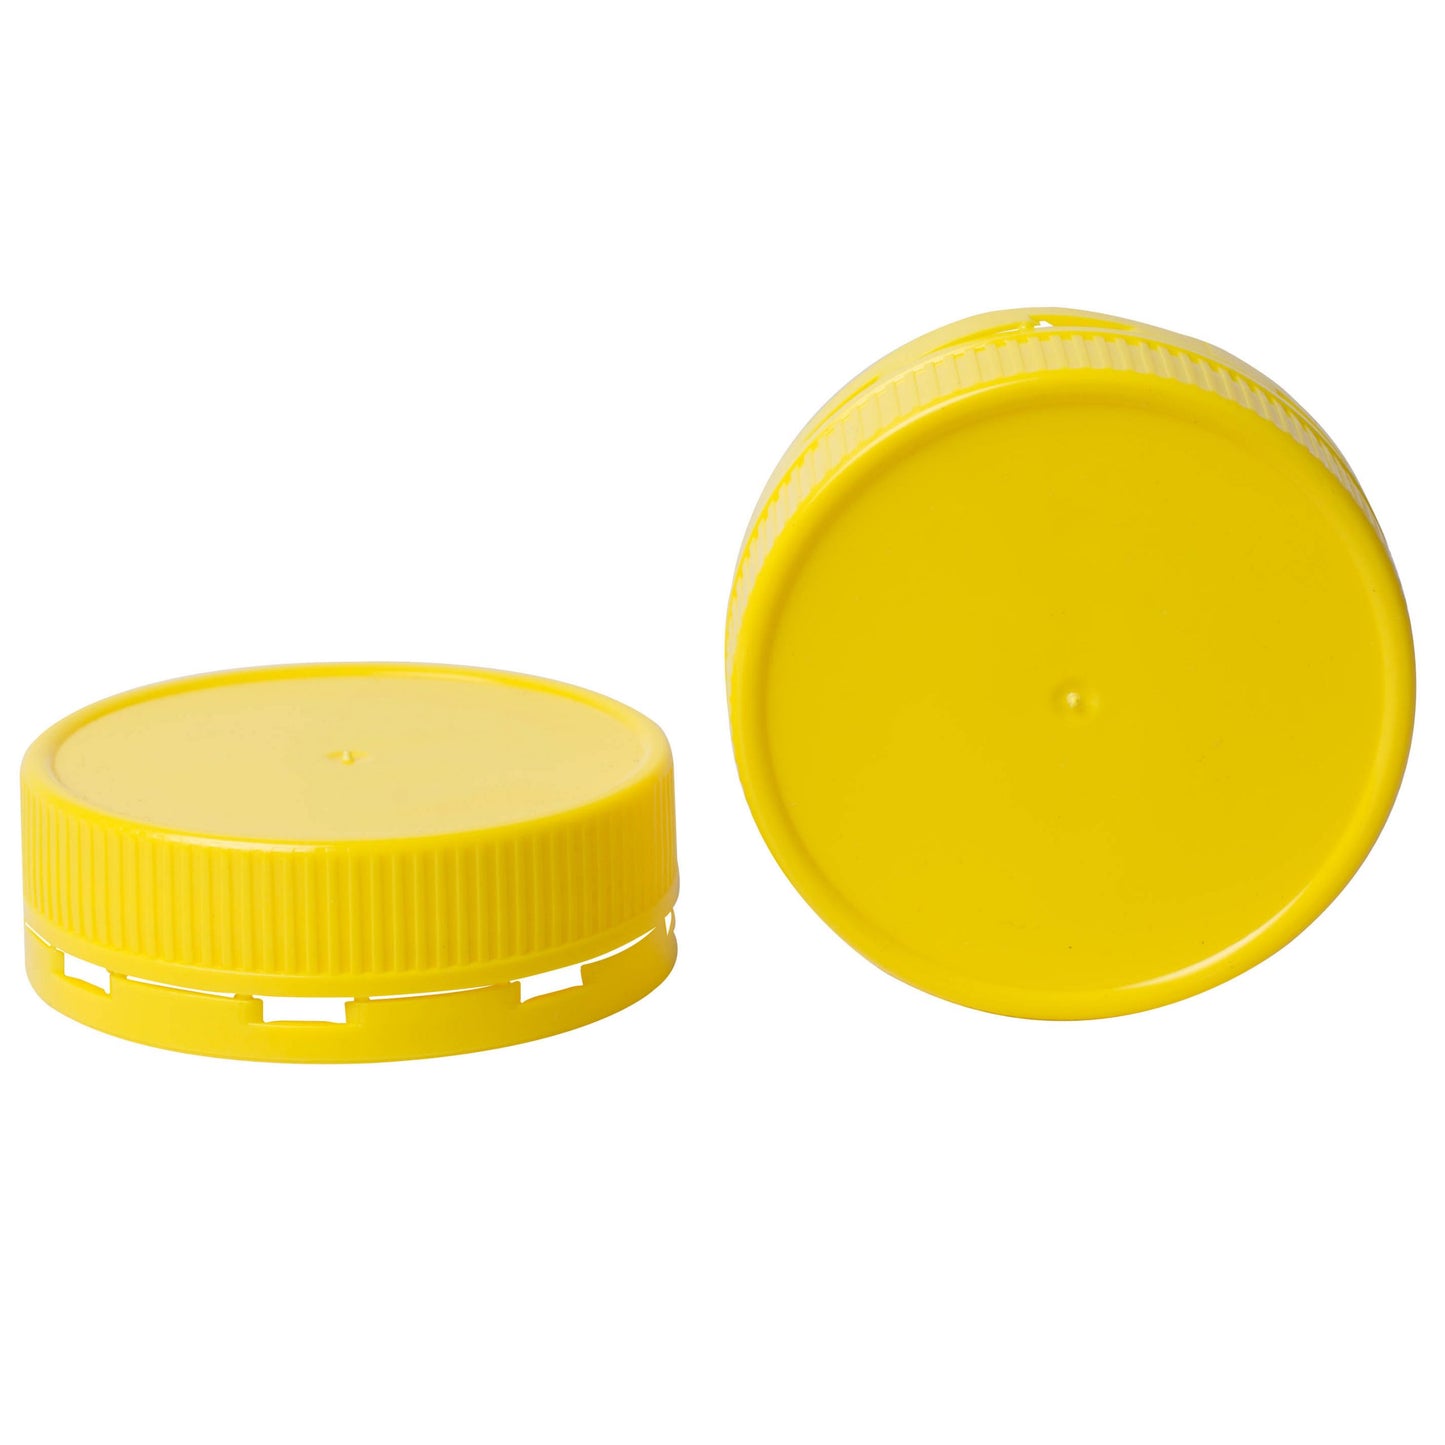 Honey Bottles -500gm/375ml Round Jar Including Lid - Plastic